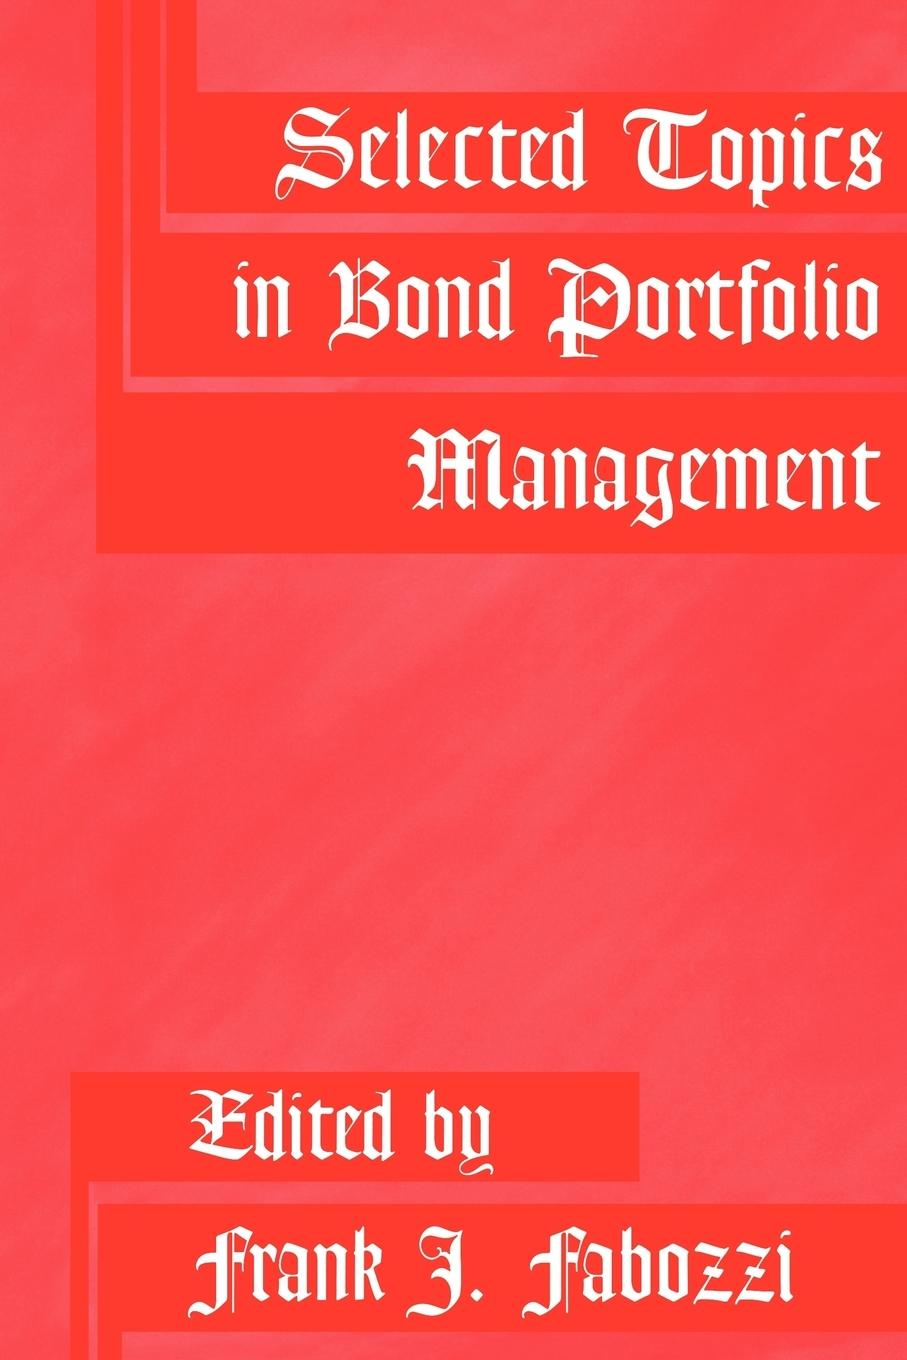 Selected Topics in Bond Portfolio Management - Fabozzi